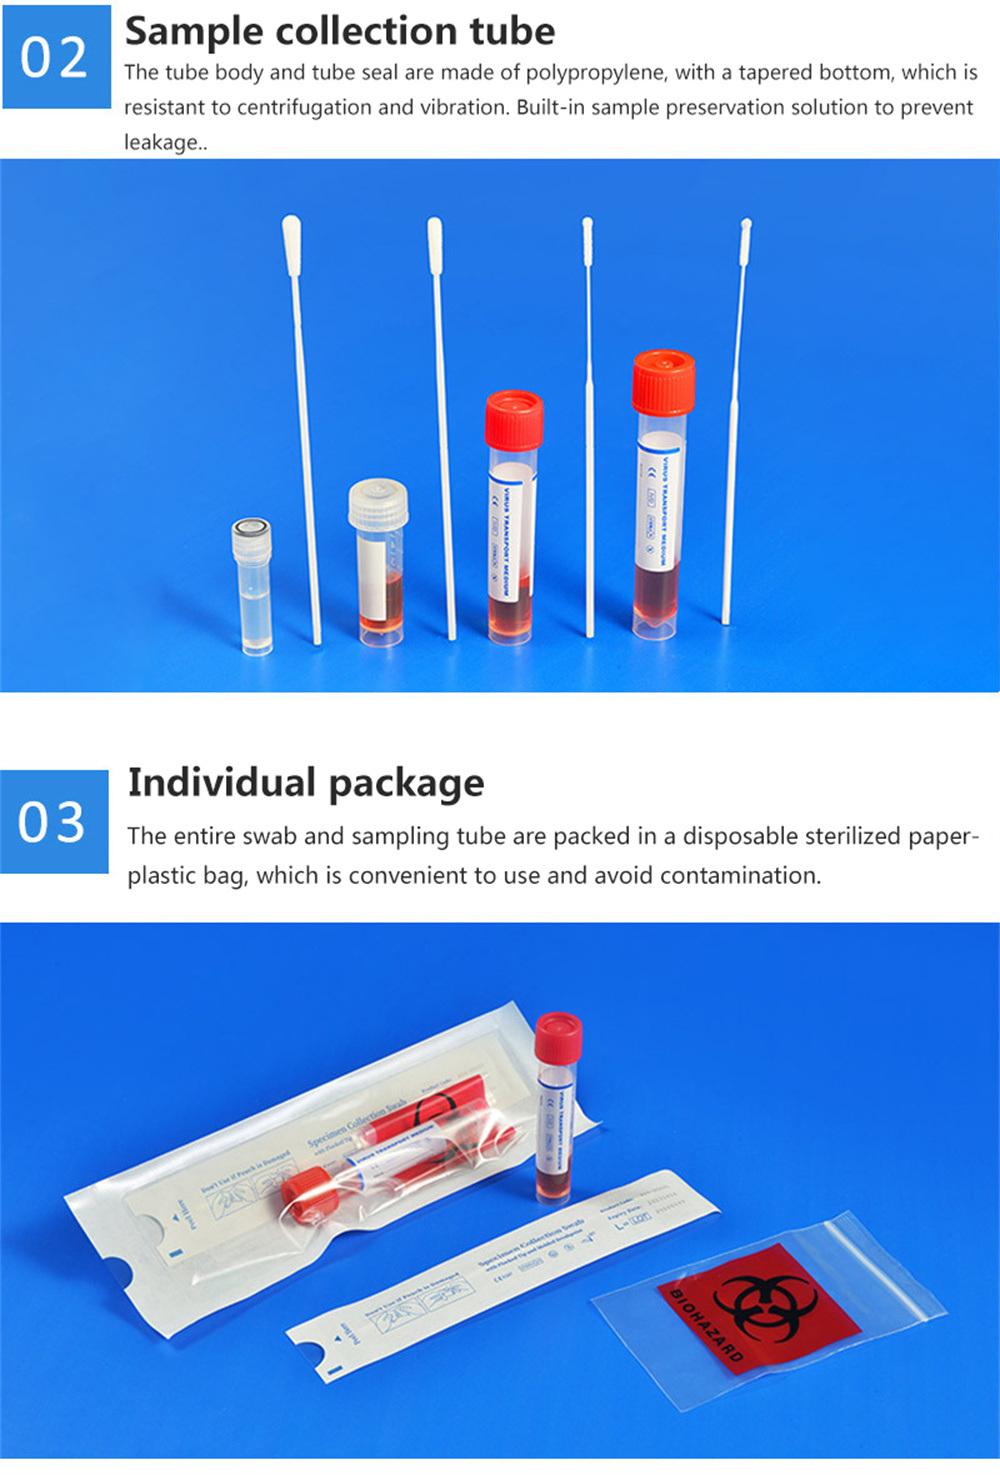 3ml 5ml 10ml Vtm Medicaldisposable Virus Viral Universal Transport Medium Kits Specimen Collection Sampling Tube with Nasopharyngeal Nasal Collection Swabs